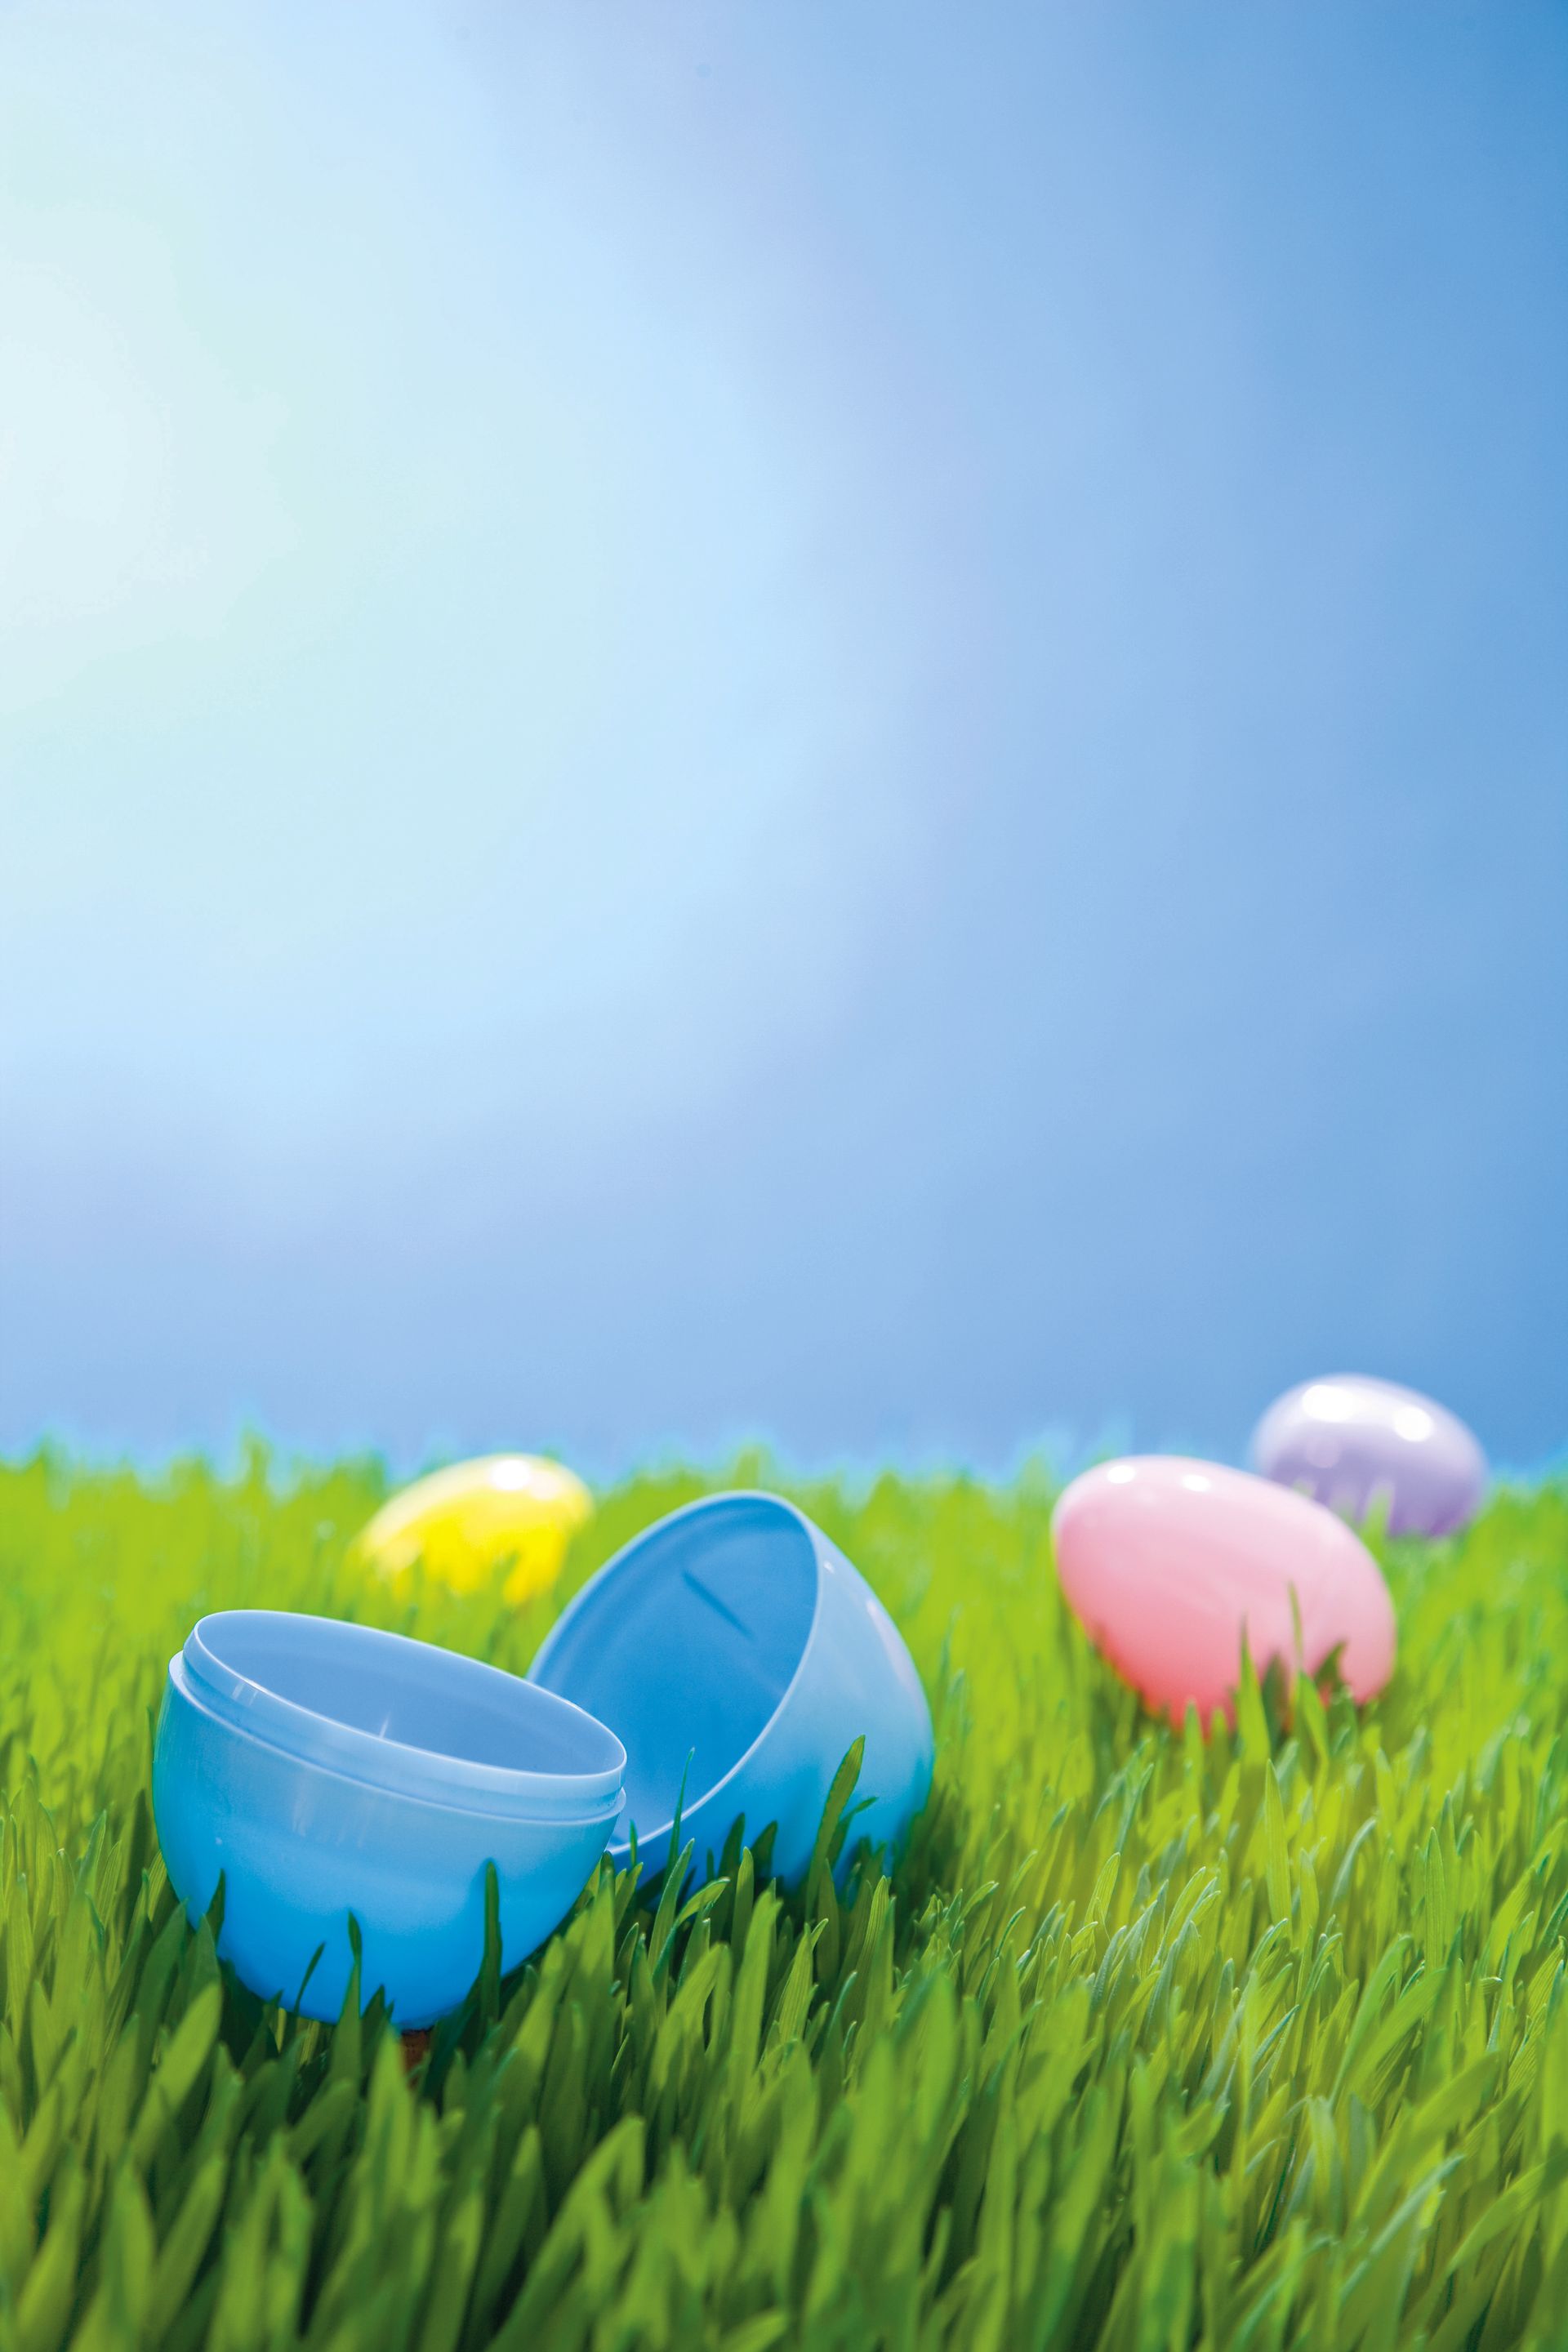 Several plastic Easter eggs lying in green grass.